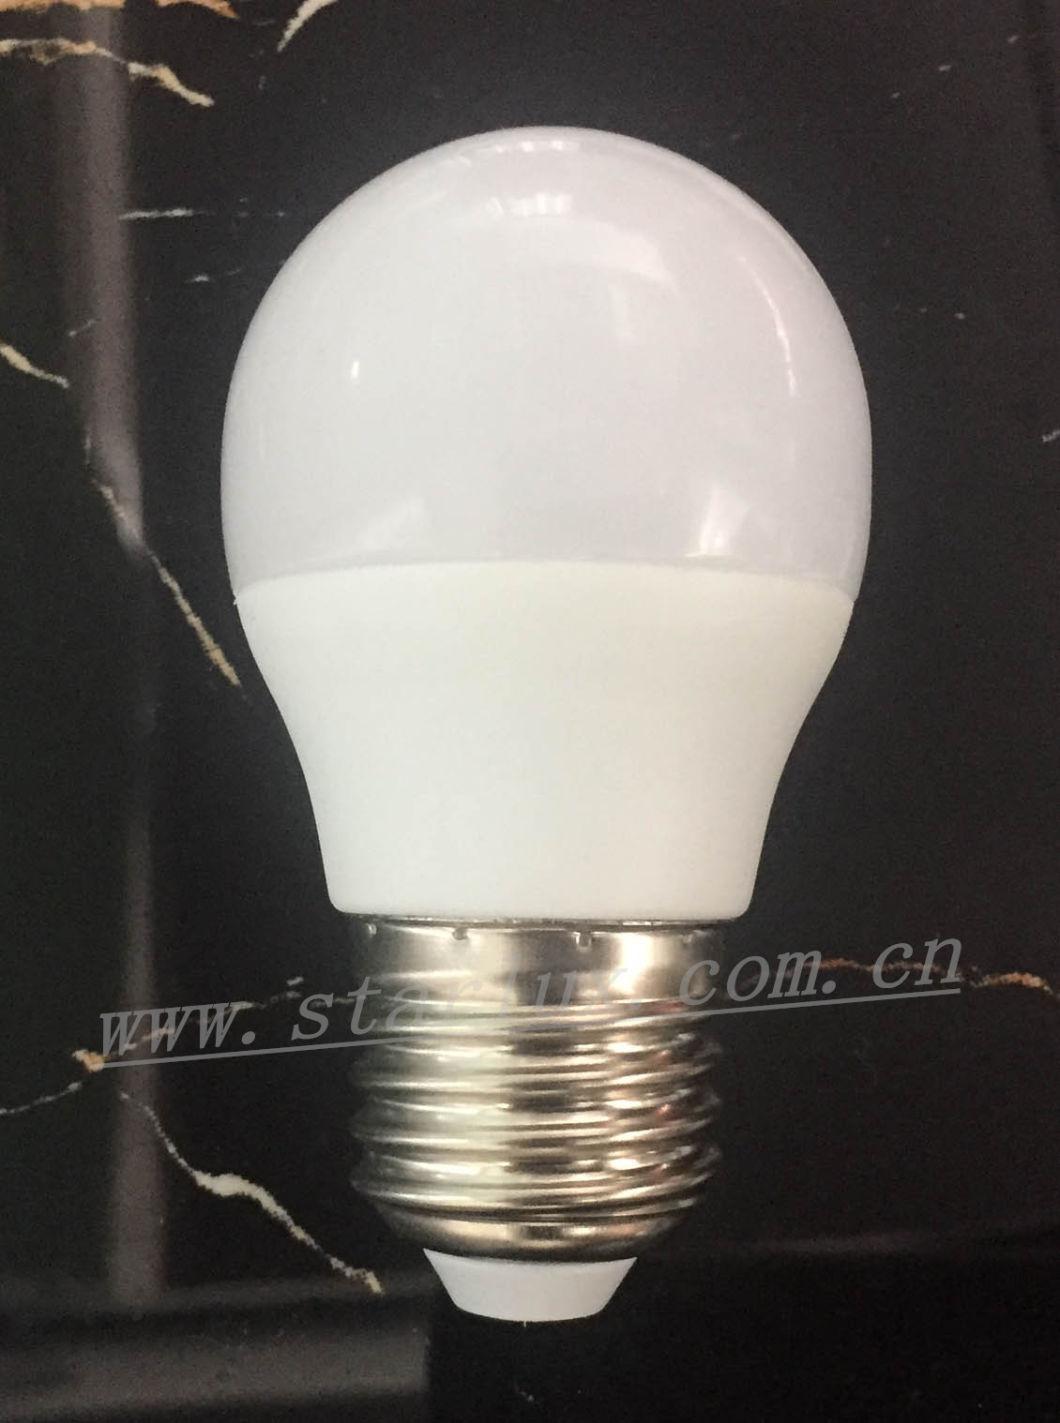 LED Light Bulb G45 LED Globe Lamp 5W E27 3000K/4100K/6500K